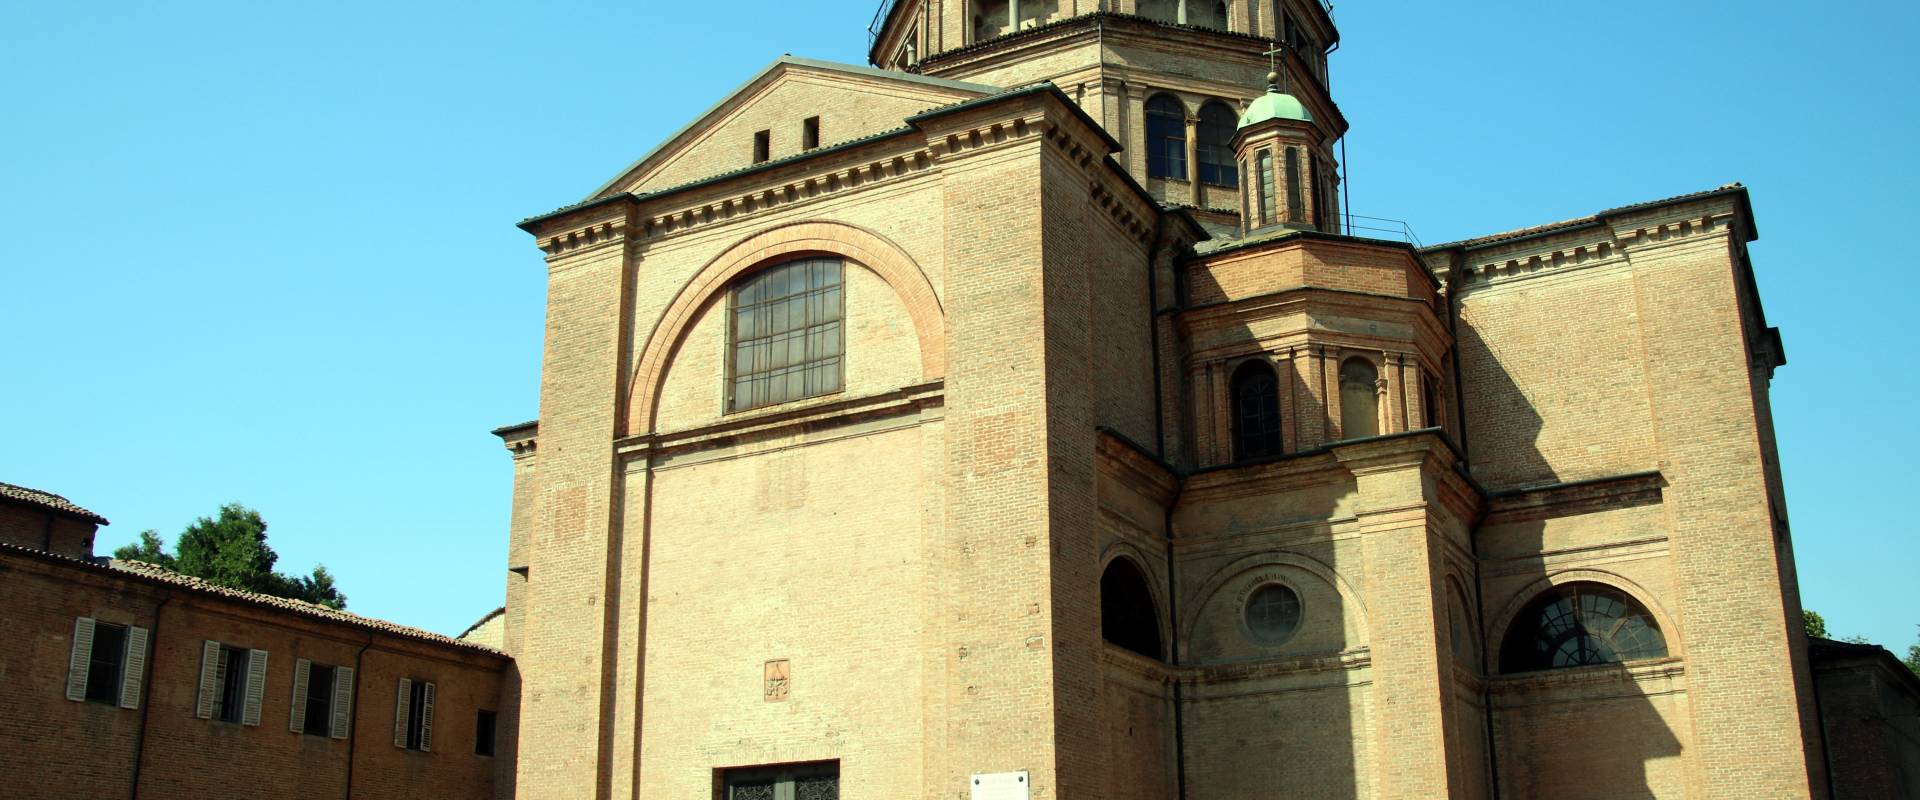 Basilica di Santa Maria di Campagna (Piacenza) 08 photo by Mongolo1984